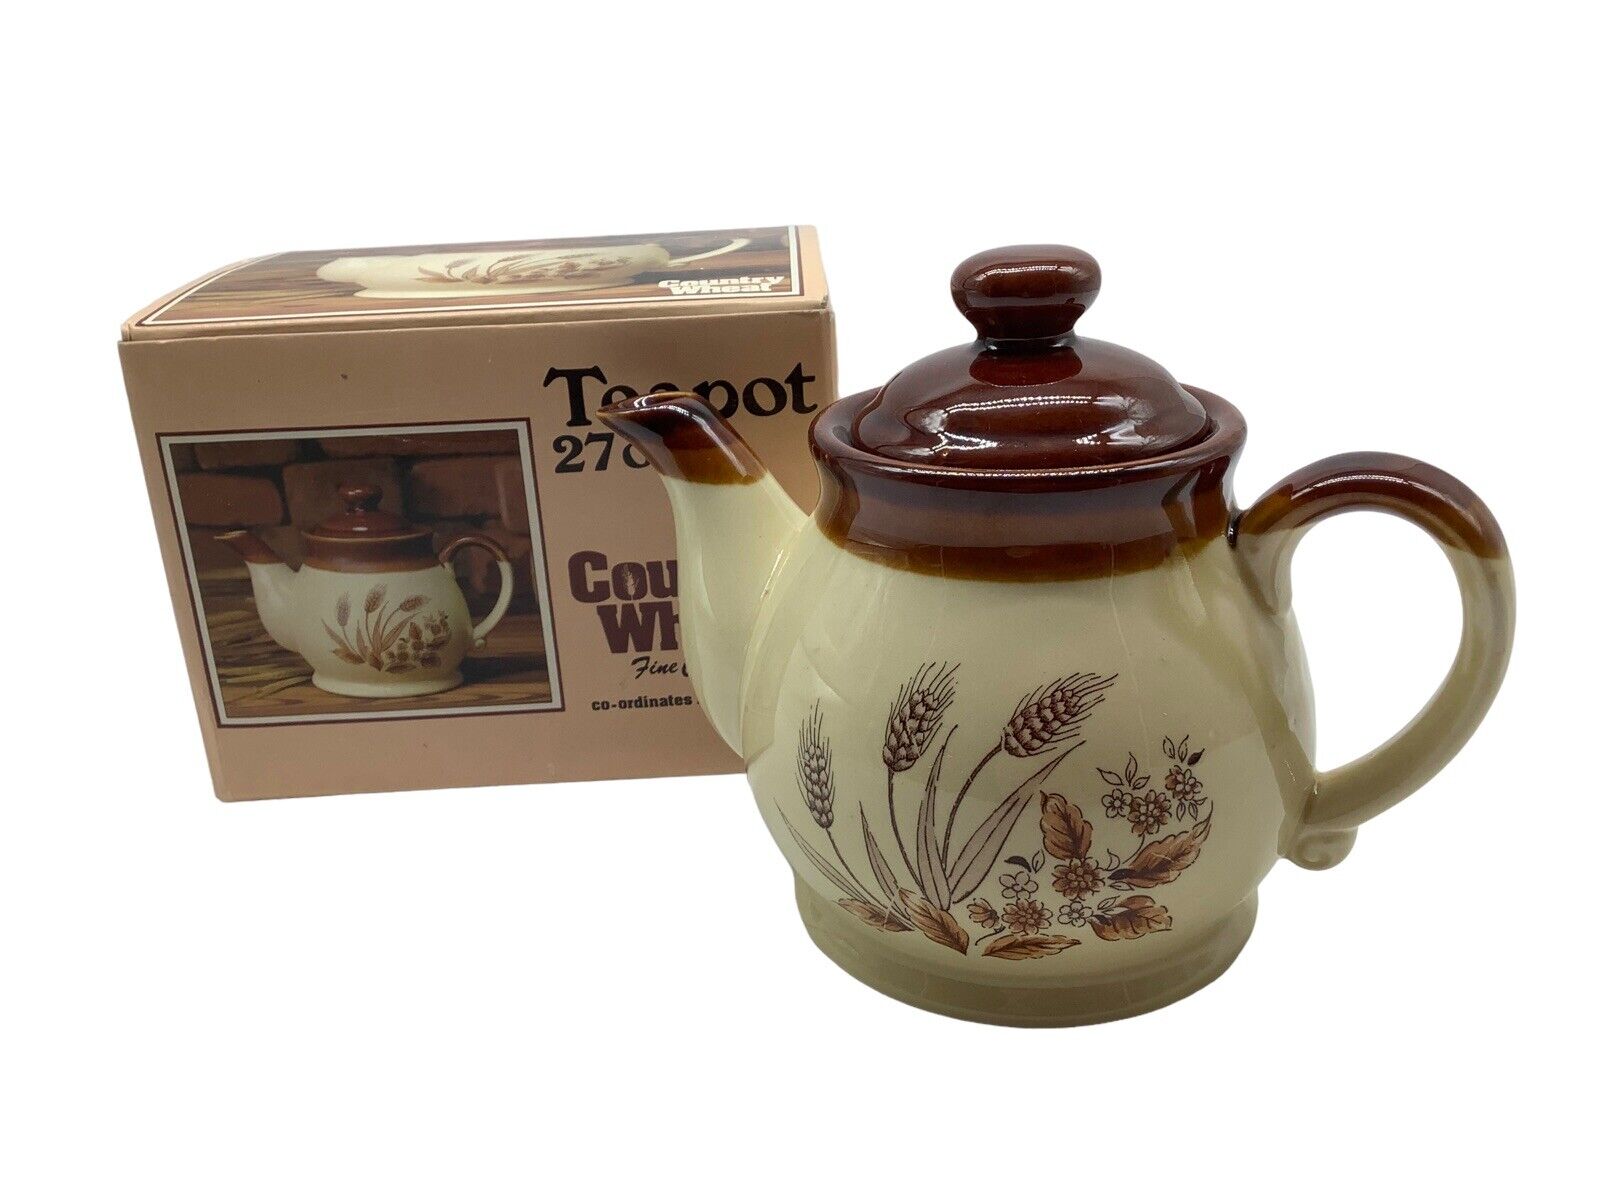 Country Wheat Ceramic Teapot 27oz with Box Vintage Teapot, NOS Serveware Teapots